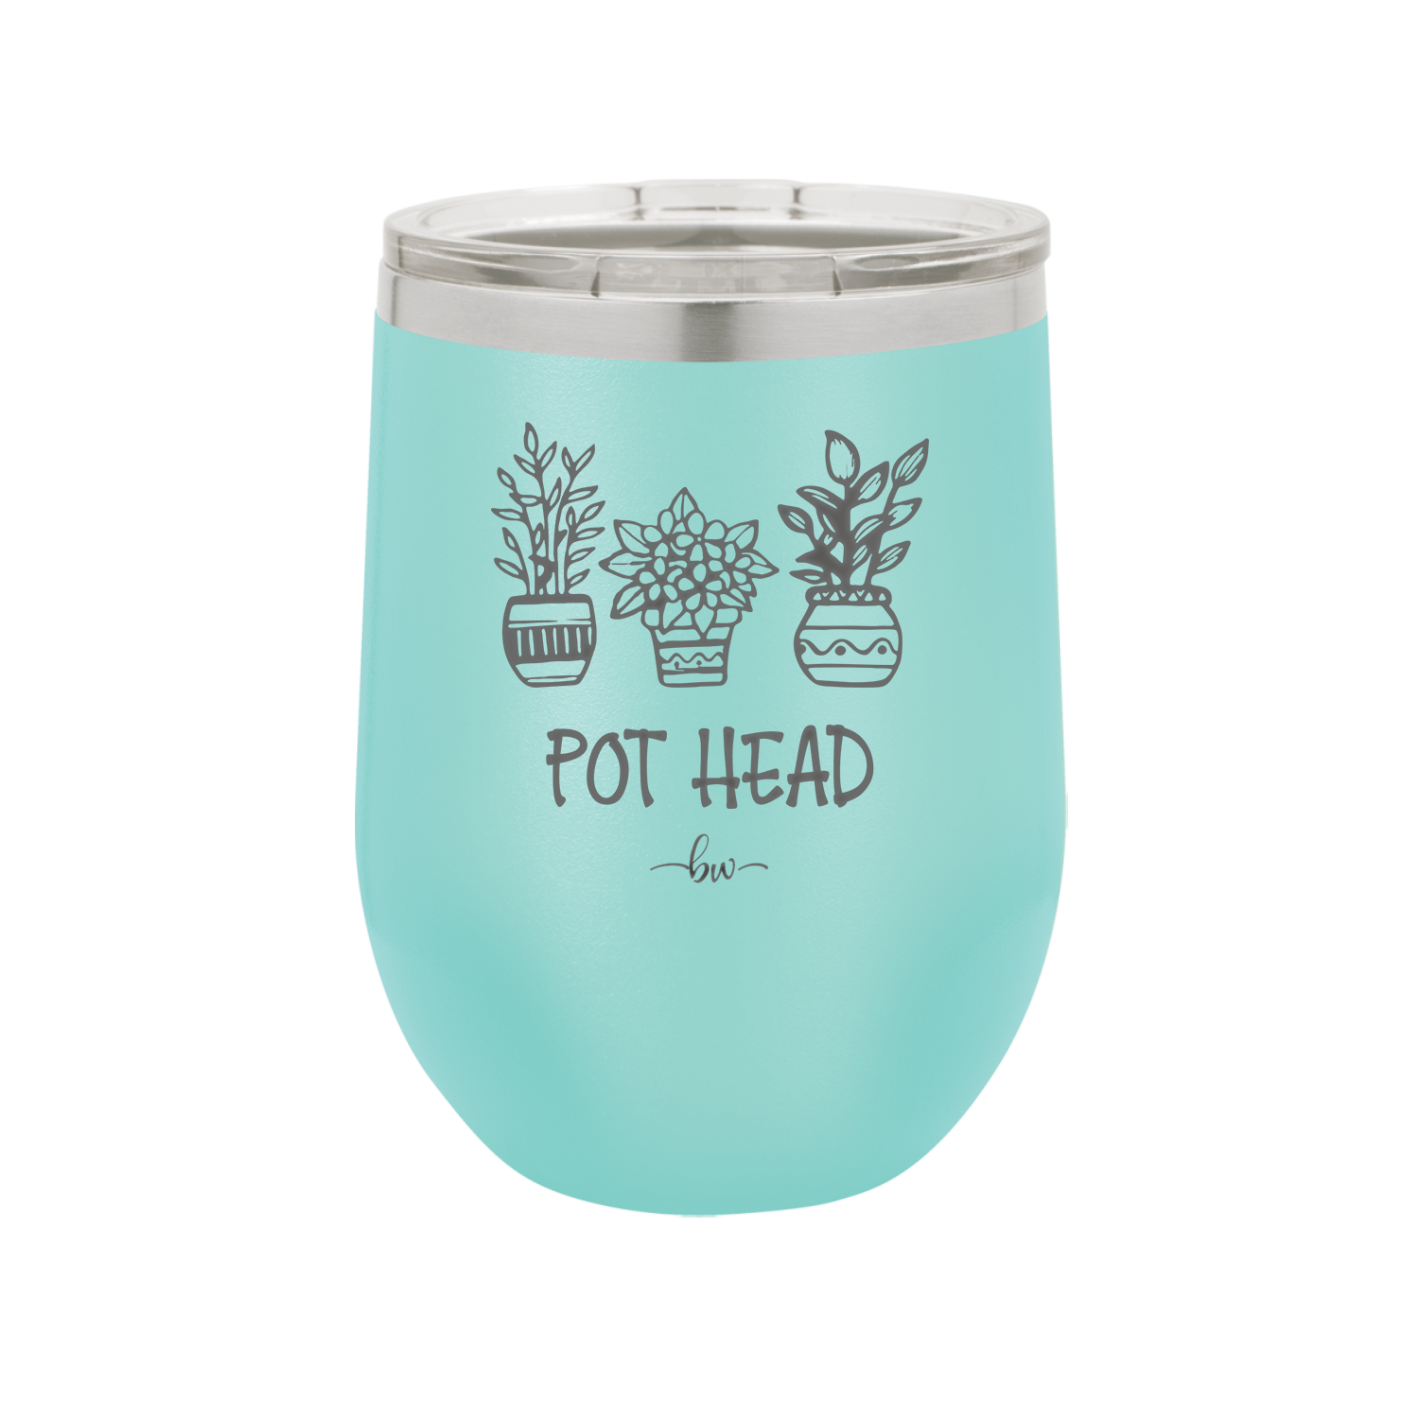 Pot Head - Laser Engraved Stainless Steel Drinkware - 2074 -